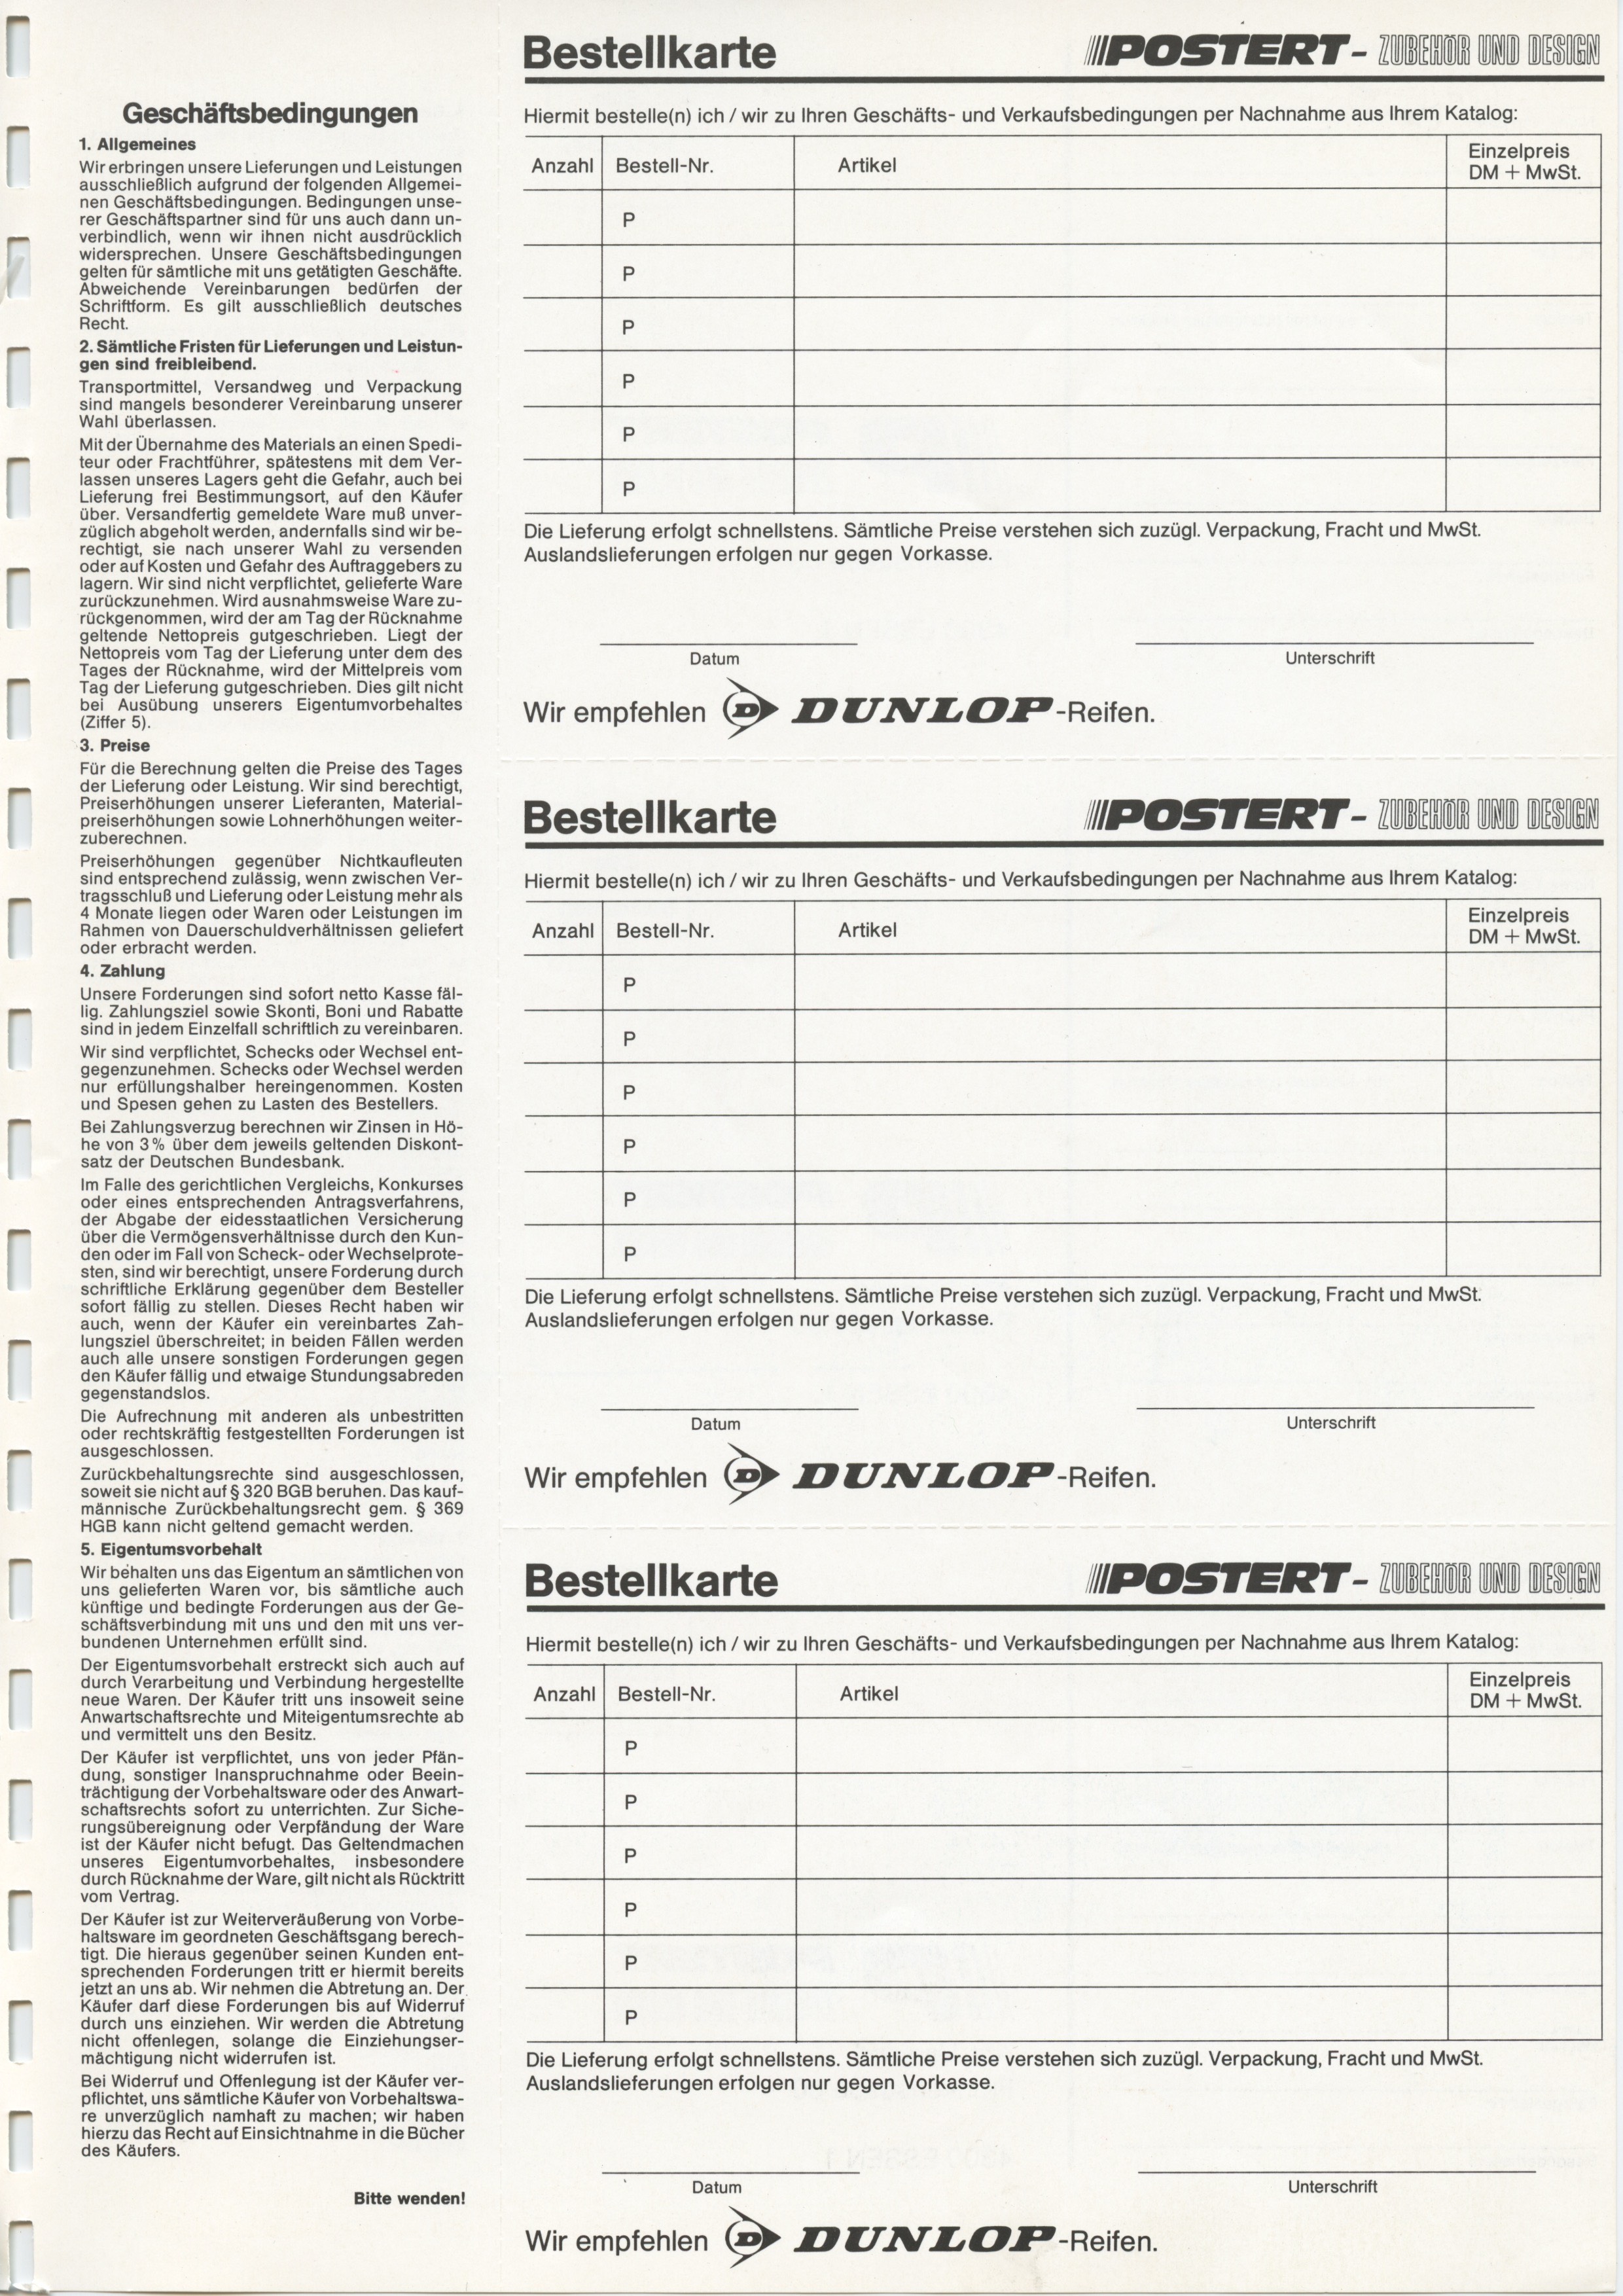 postert-catalogue-january-1988-page-03